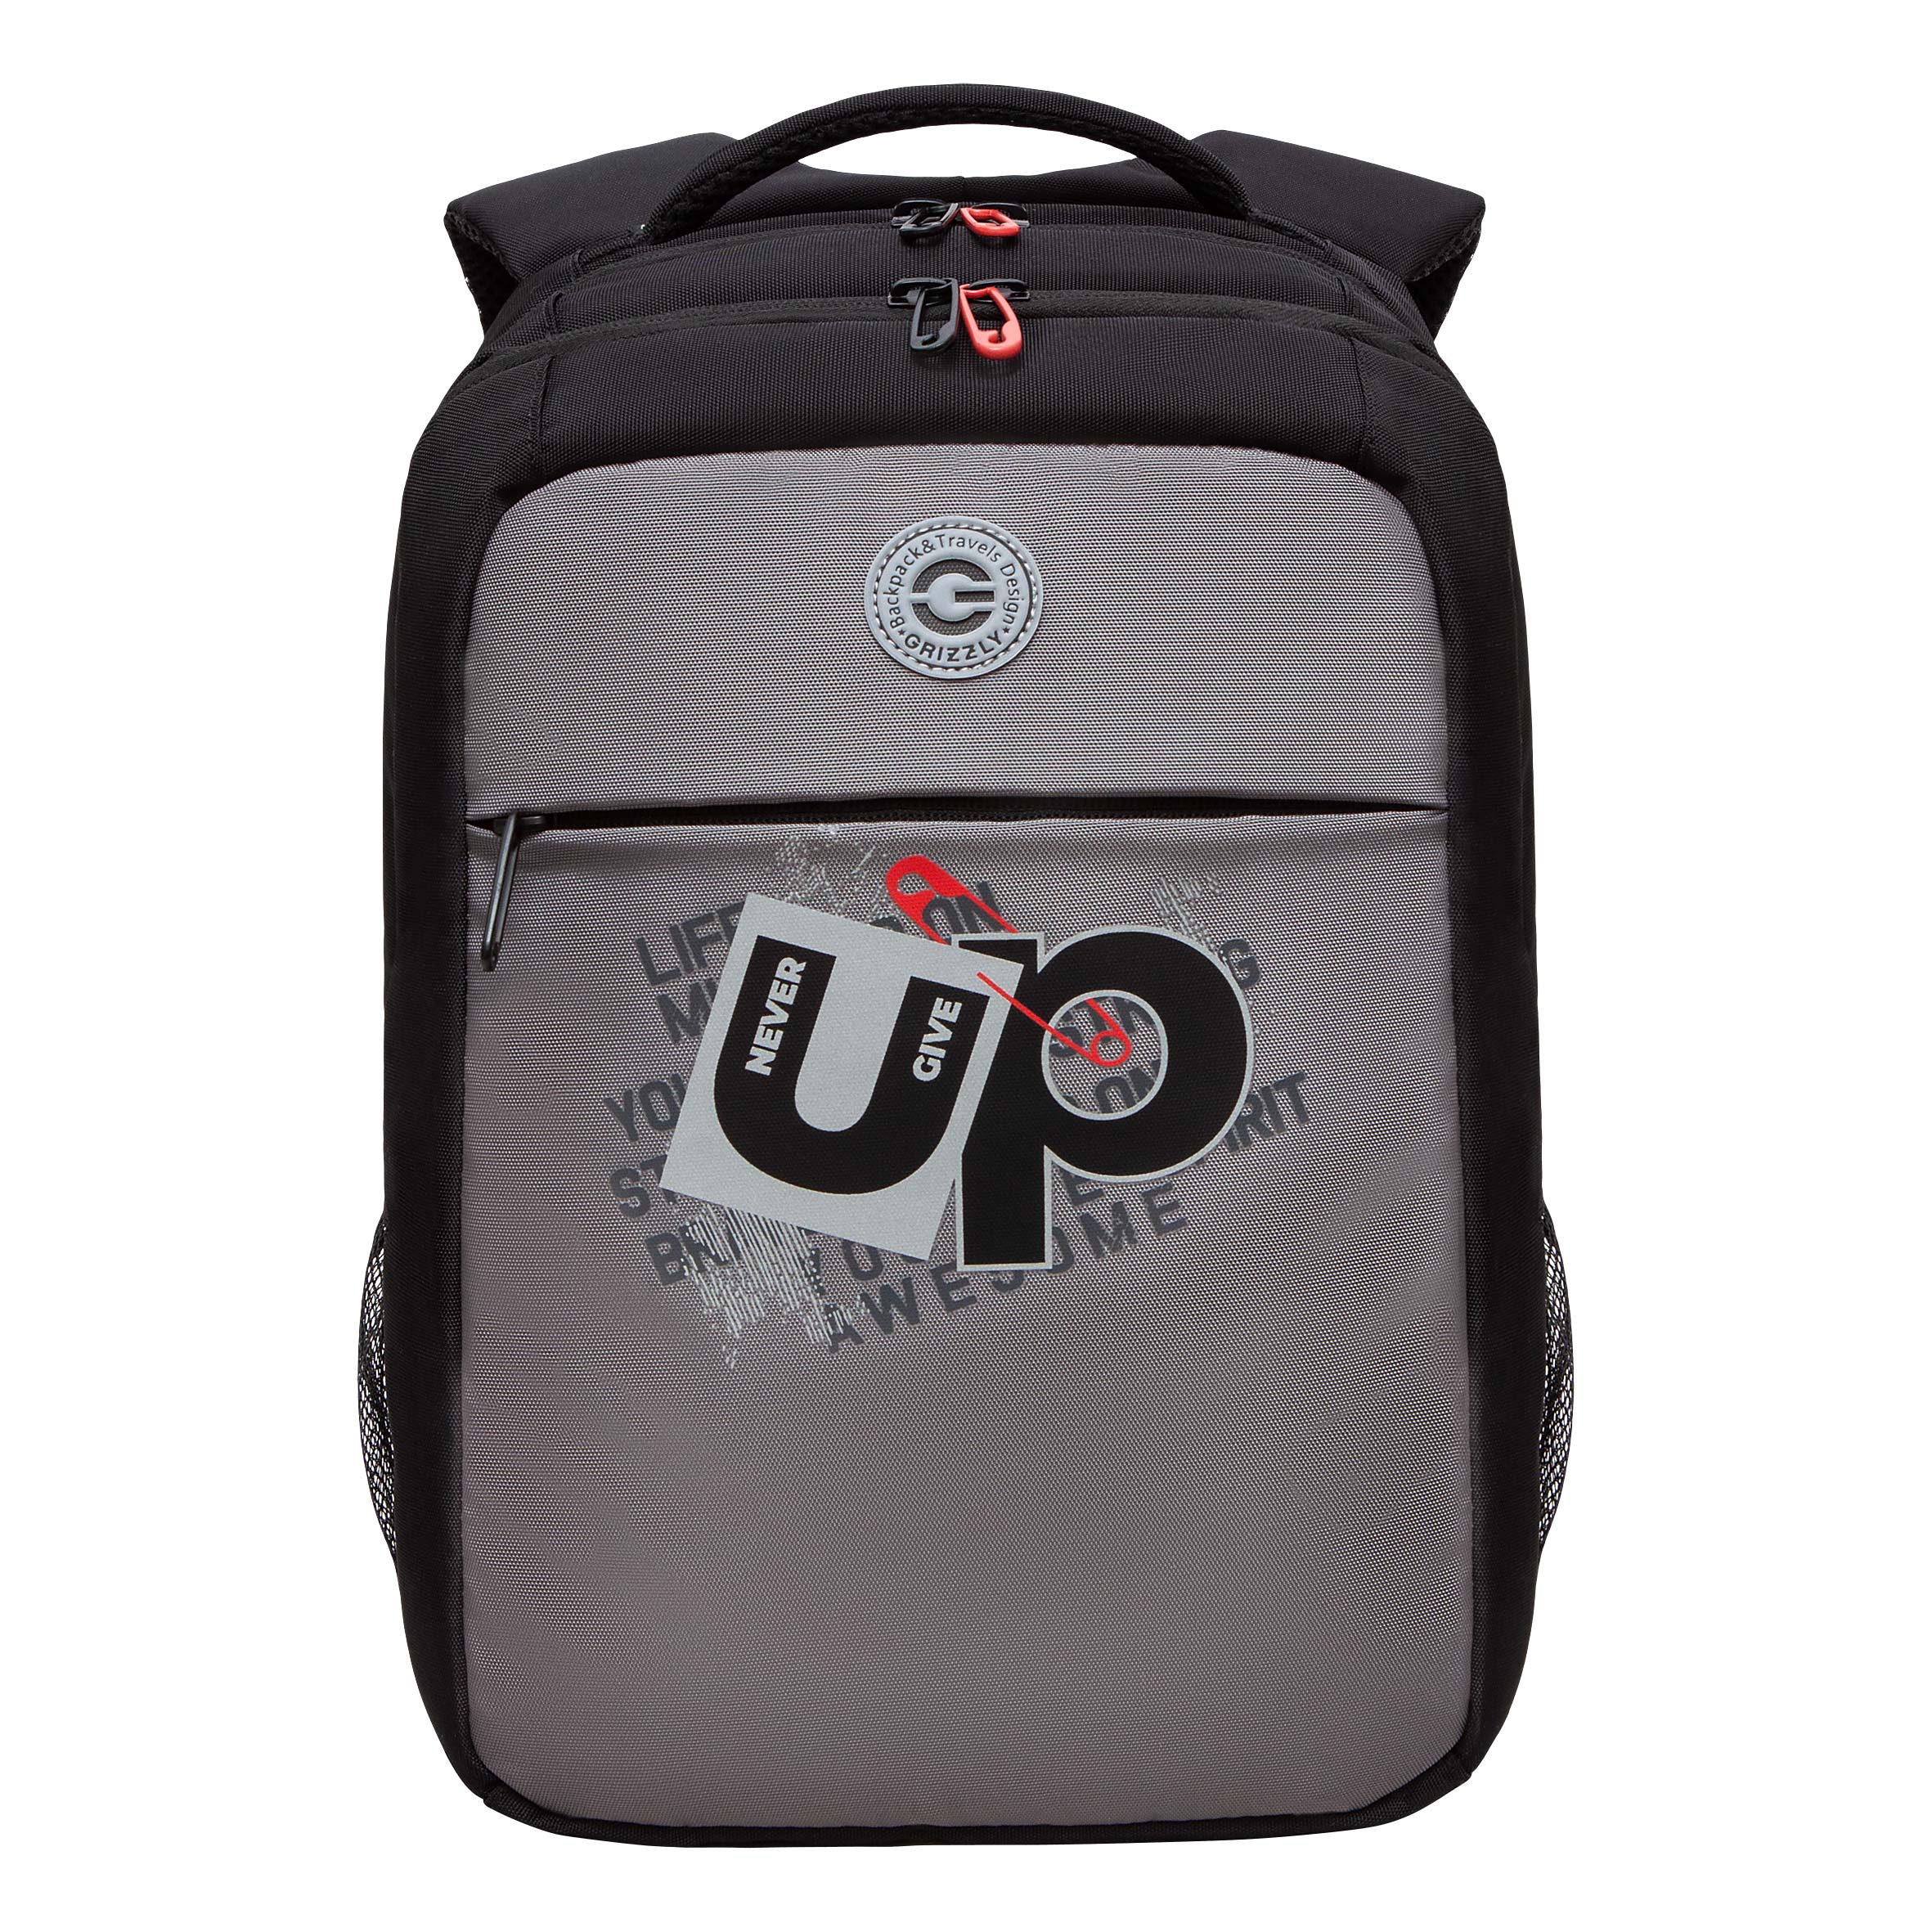 Рюкзак молодежный GRIZZLY с карманом для ноутбука 13, для мальчика, RB-456-3 2 рюкзак для мальчиков grizzly ru 437 4 серый